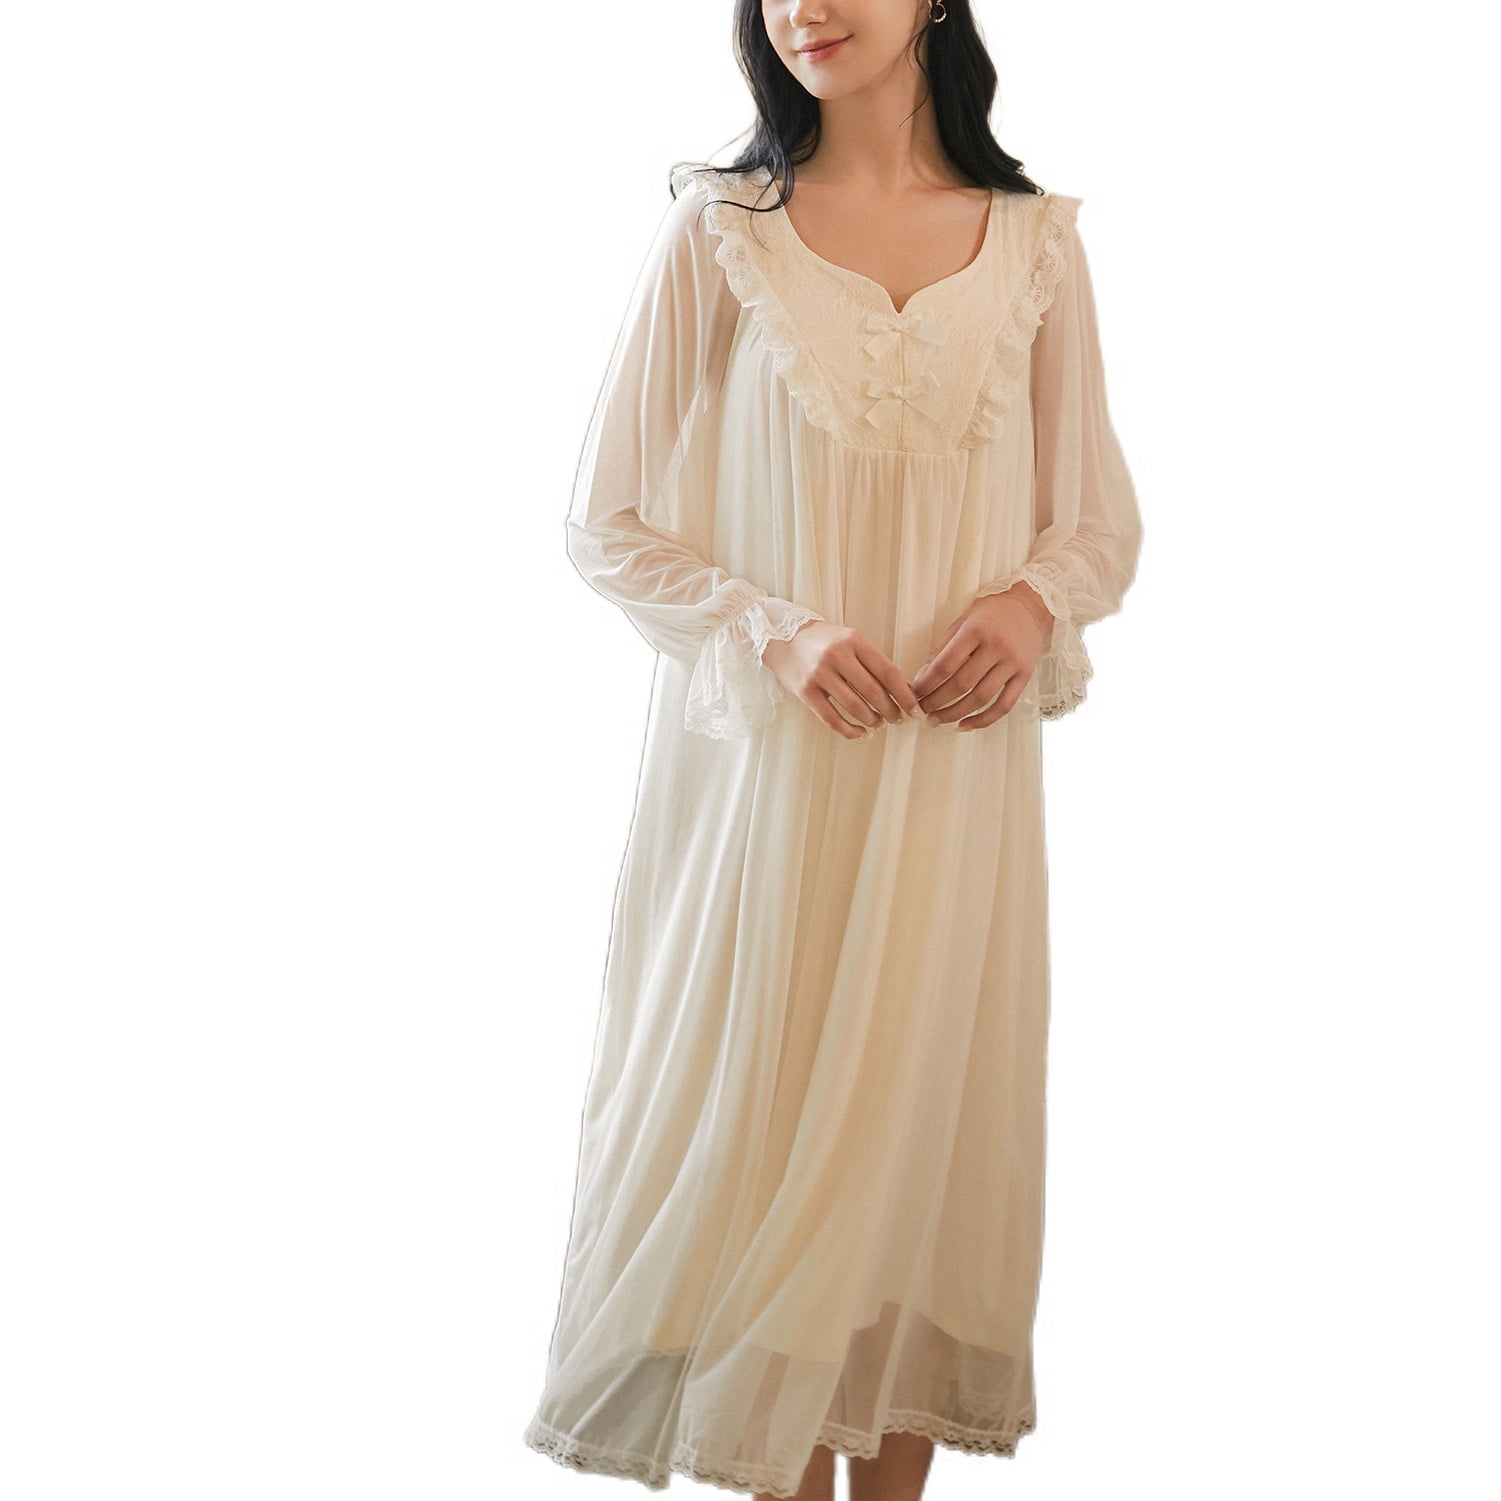 Homgro Women's Victorian Nightgown Ladies Soft Overlay Mesh Bishop ...